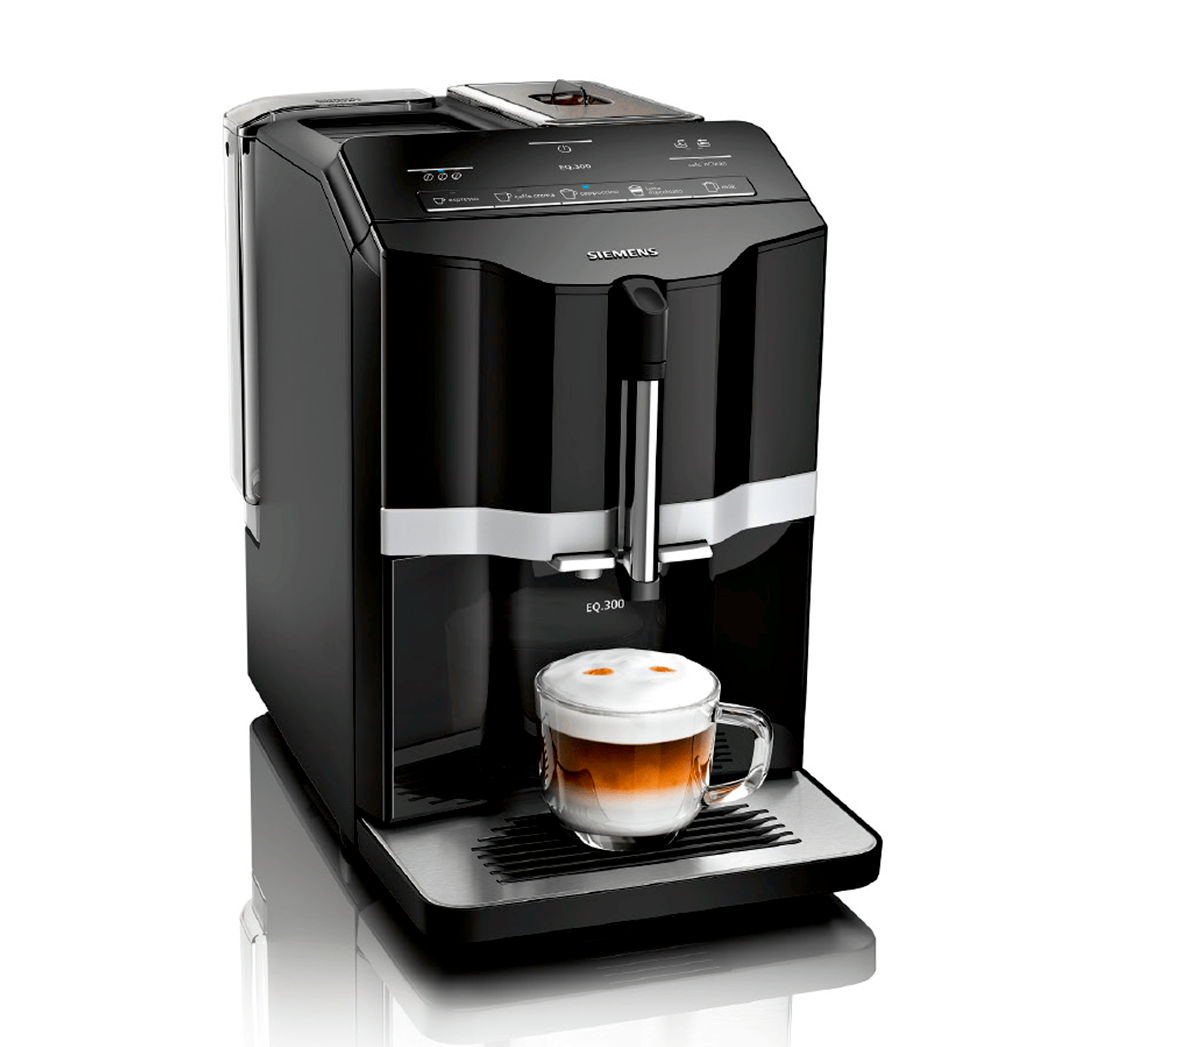 Siemens TI351209RW Kahve Makinesi